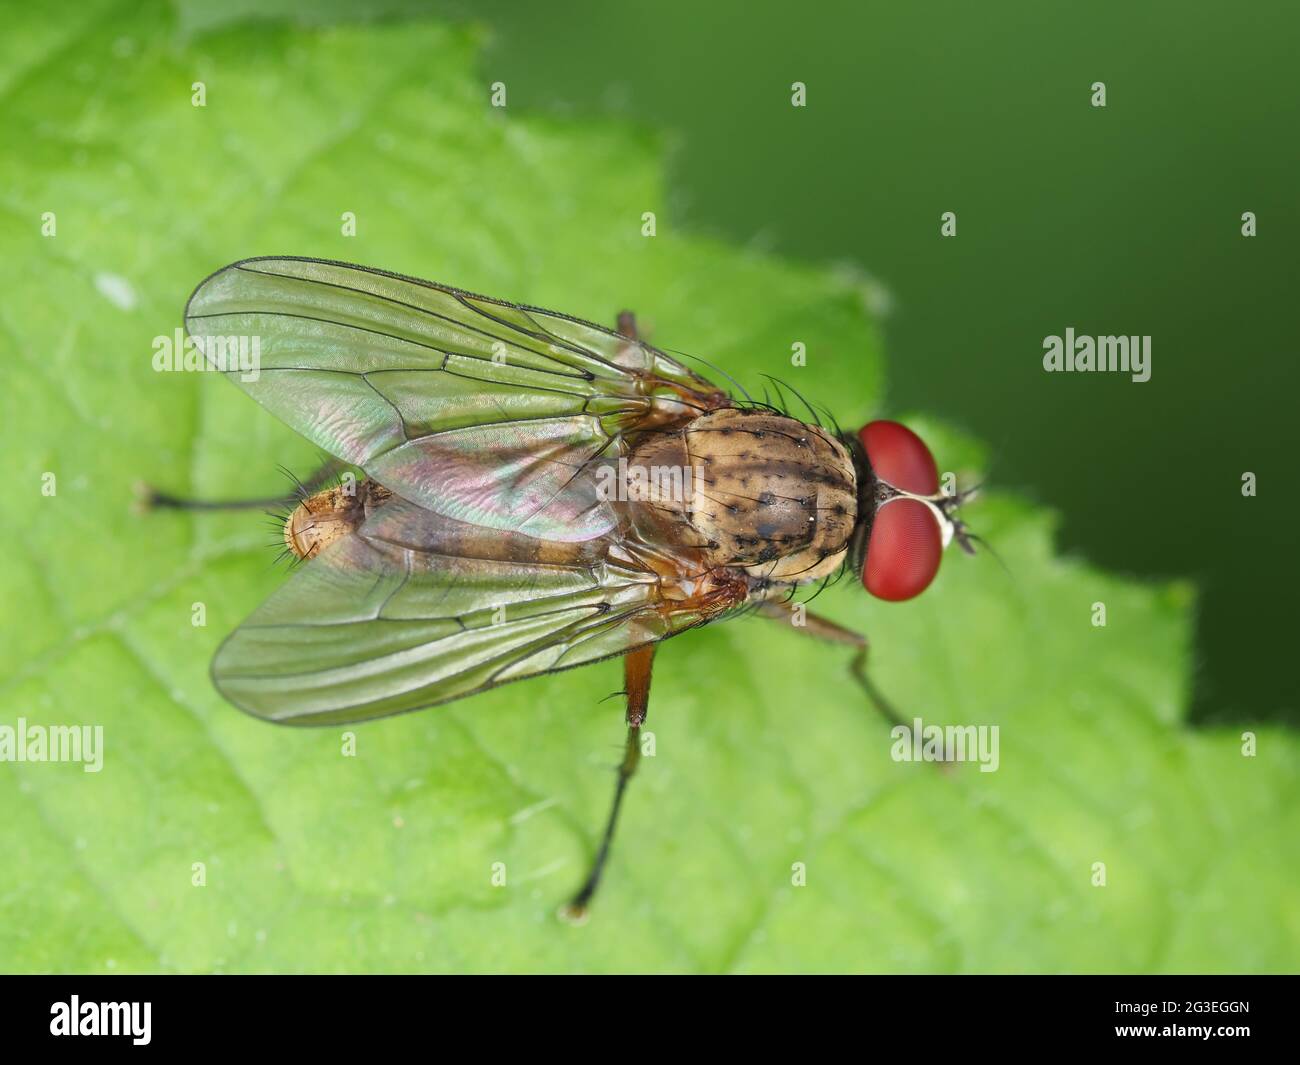 Muscidae fly - insect macro Stock Photo